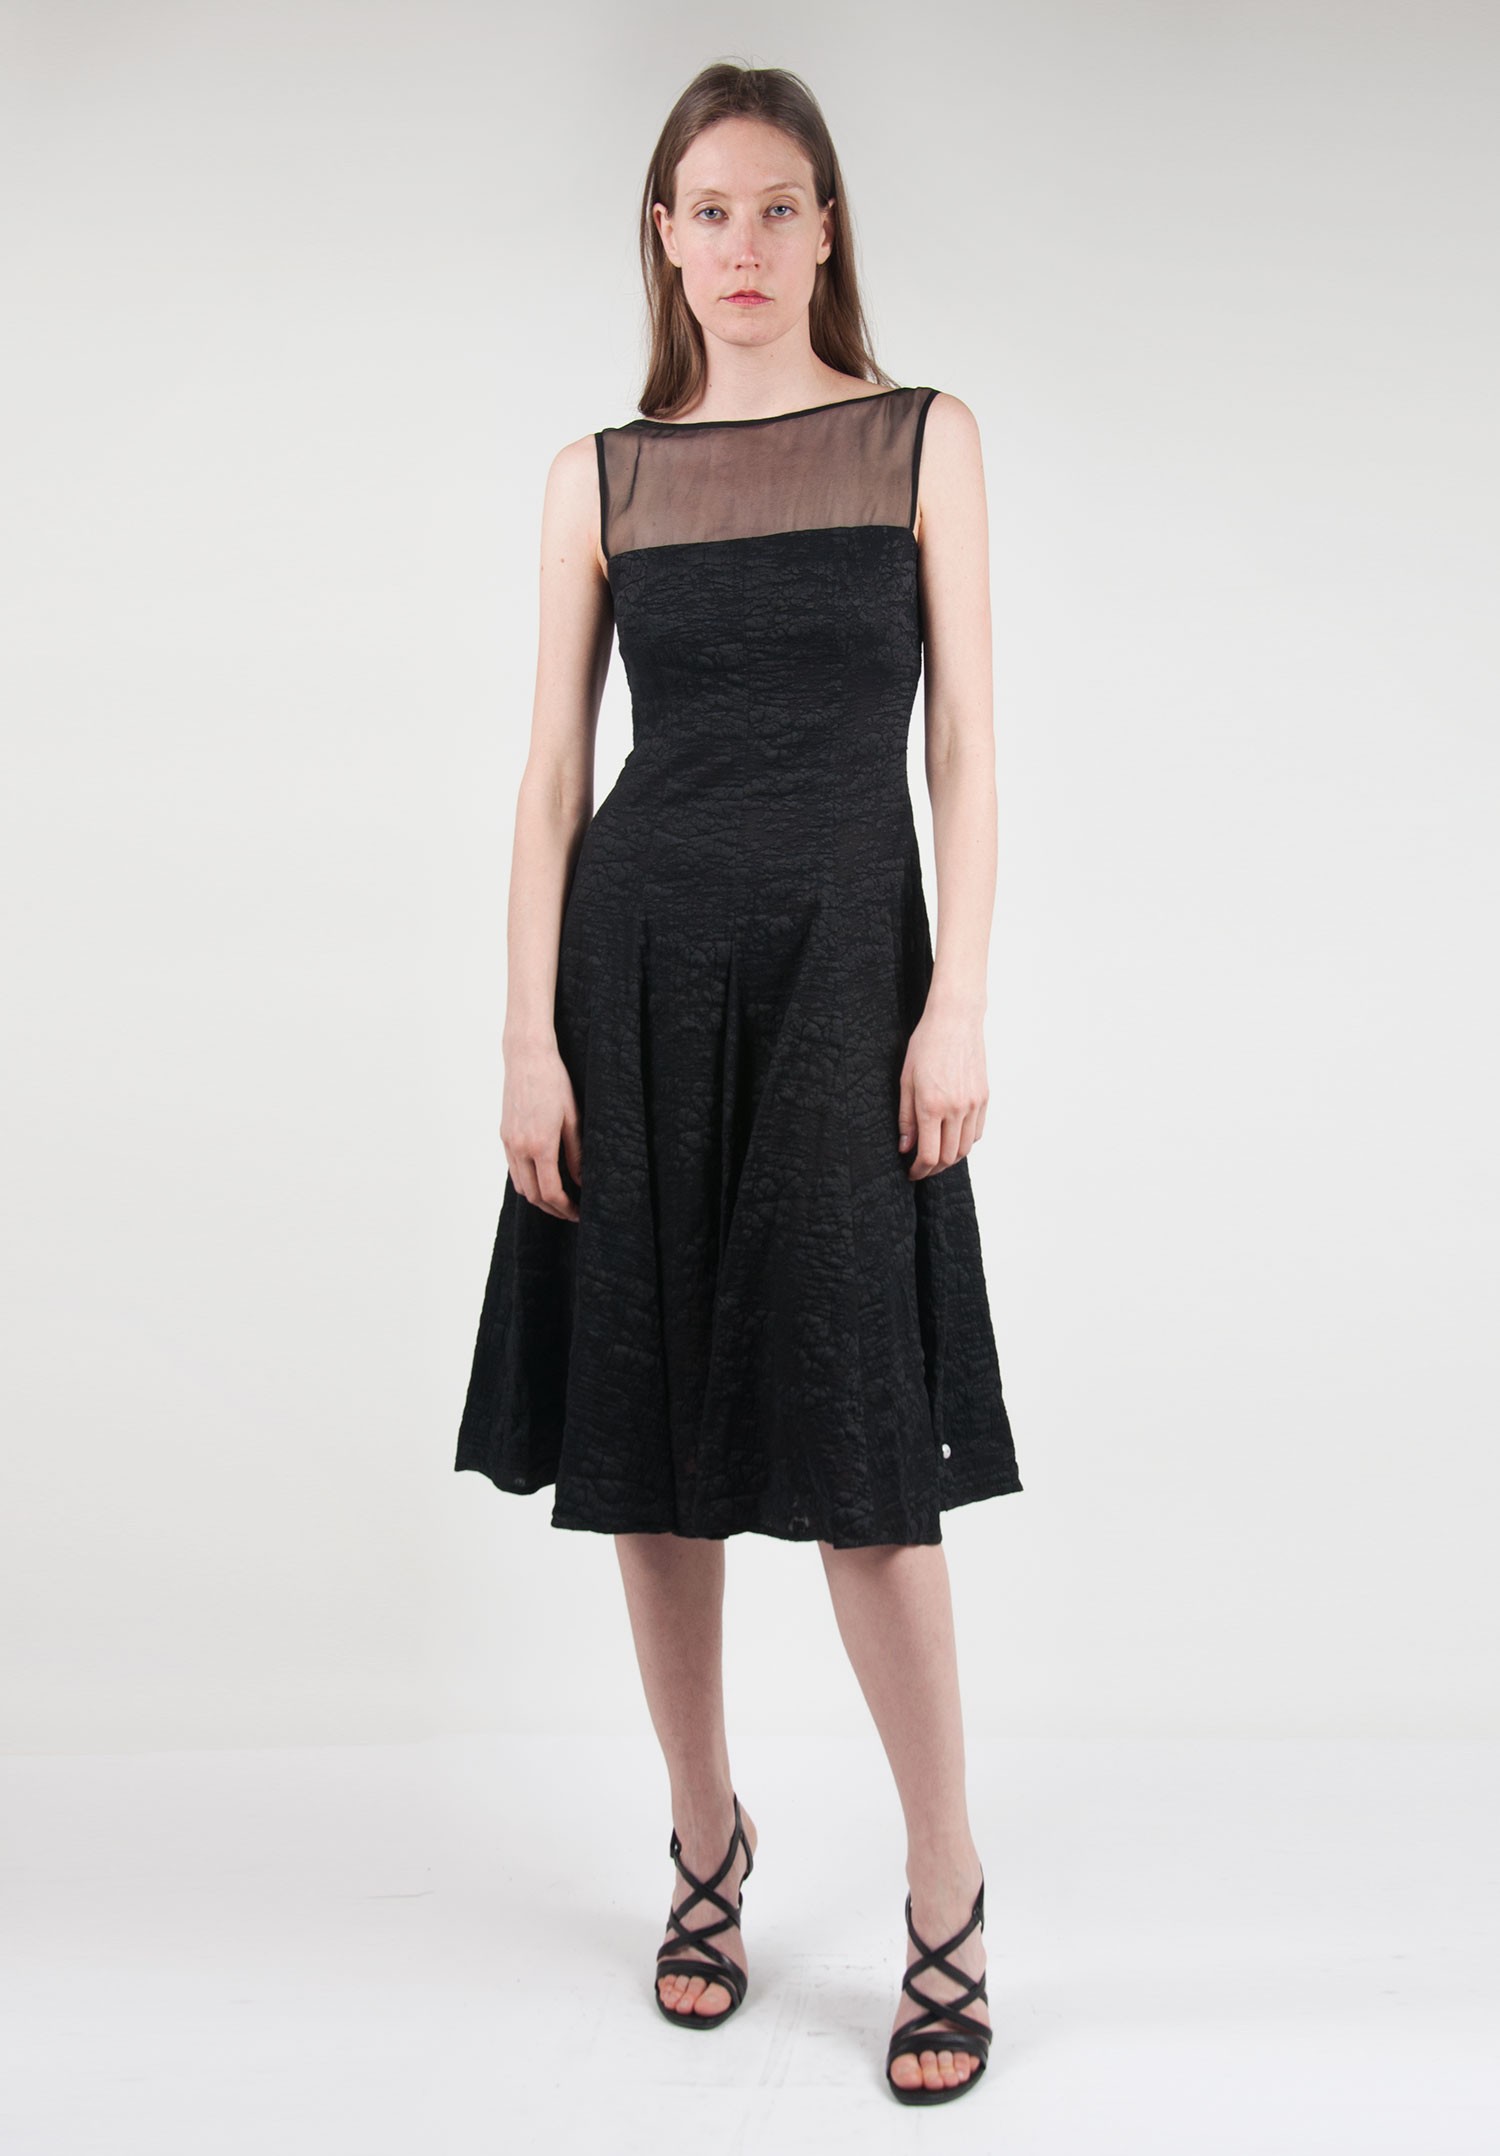 Anett Röstel Sheer Top Dress in Black | Santa Fe Dry Goods Trippen ...